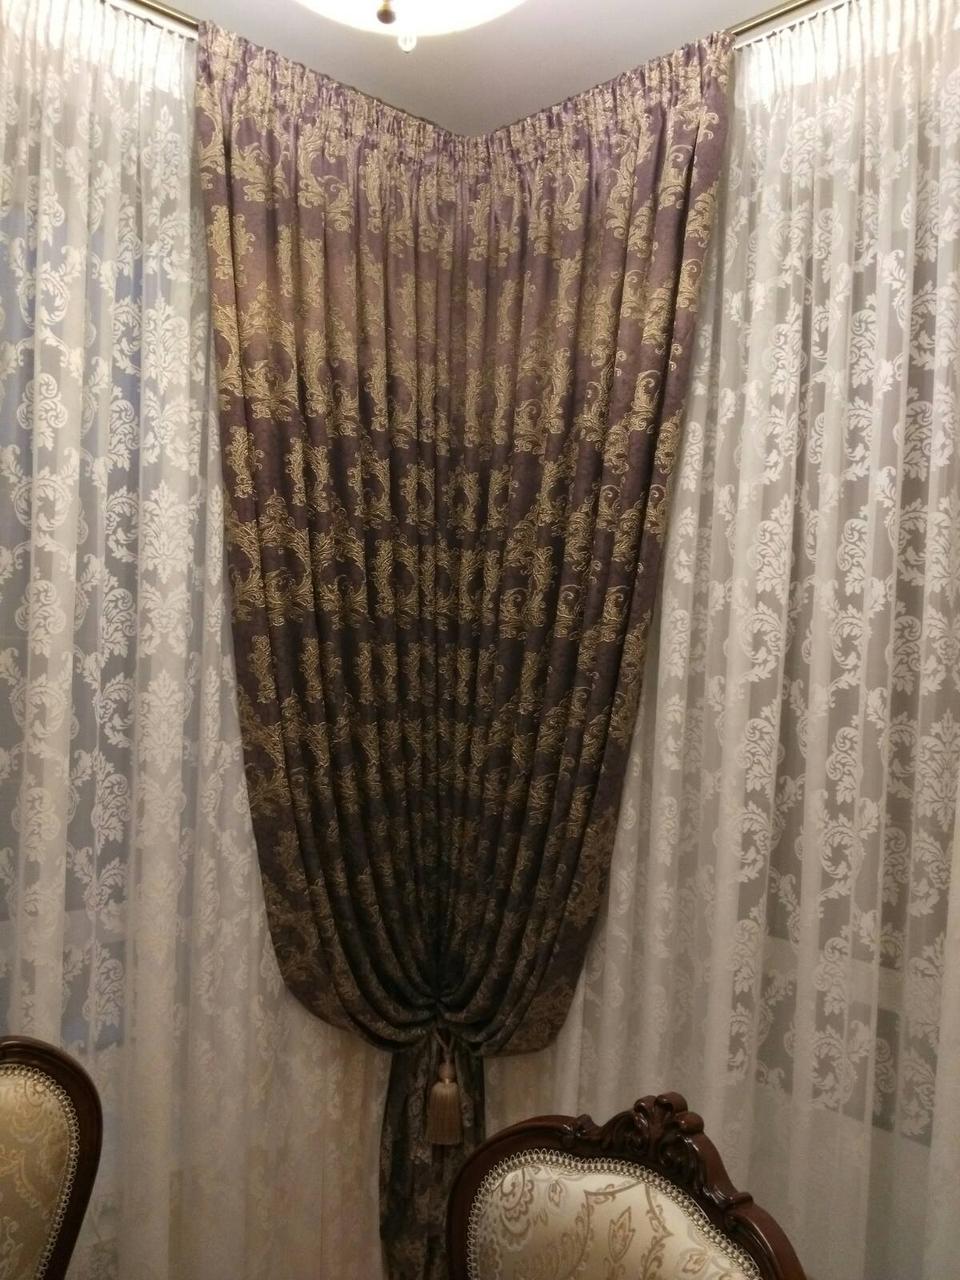 Тканина для штор Damask. Турецька тканина для штор і портьєр в класичному стилі